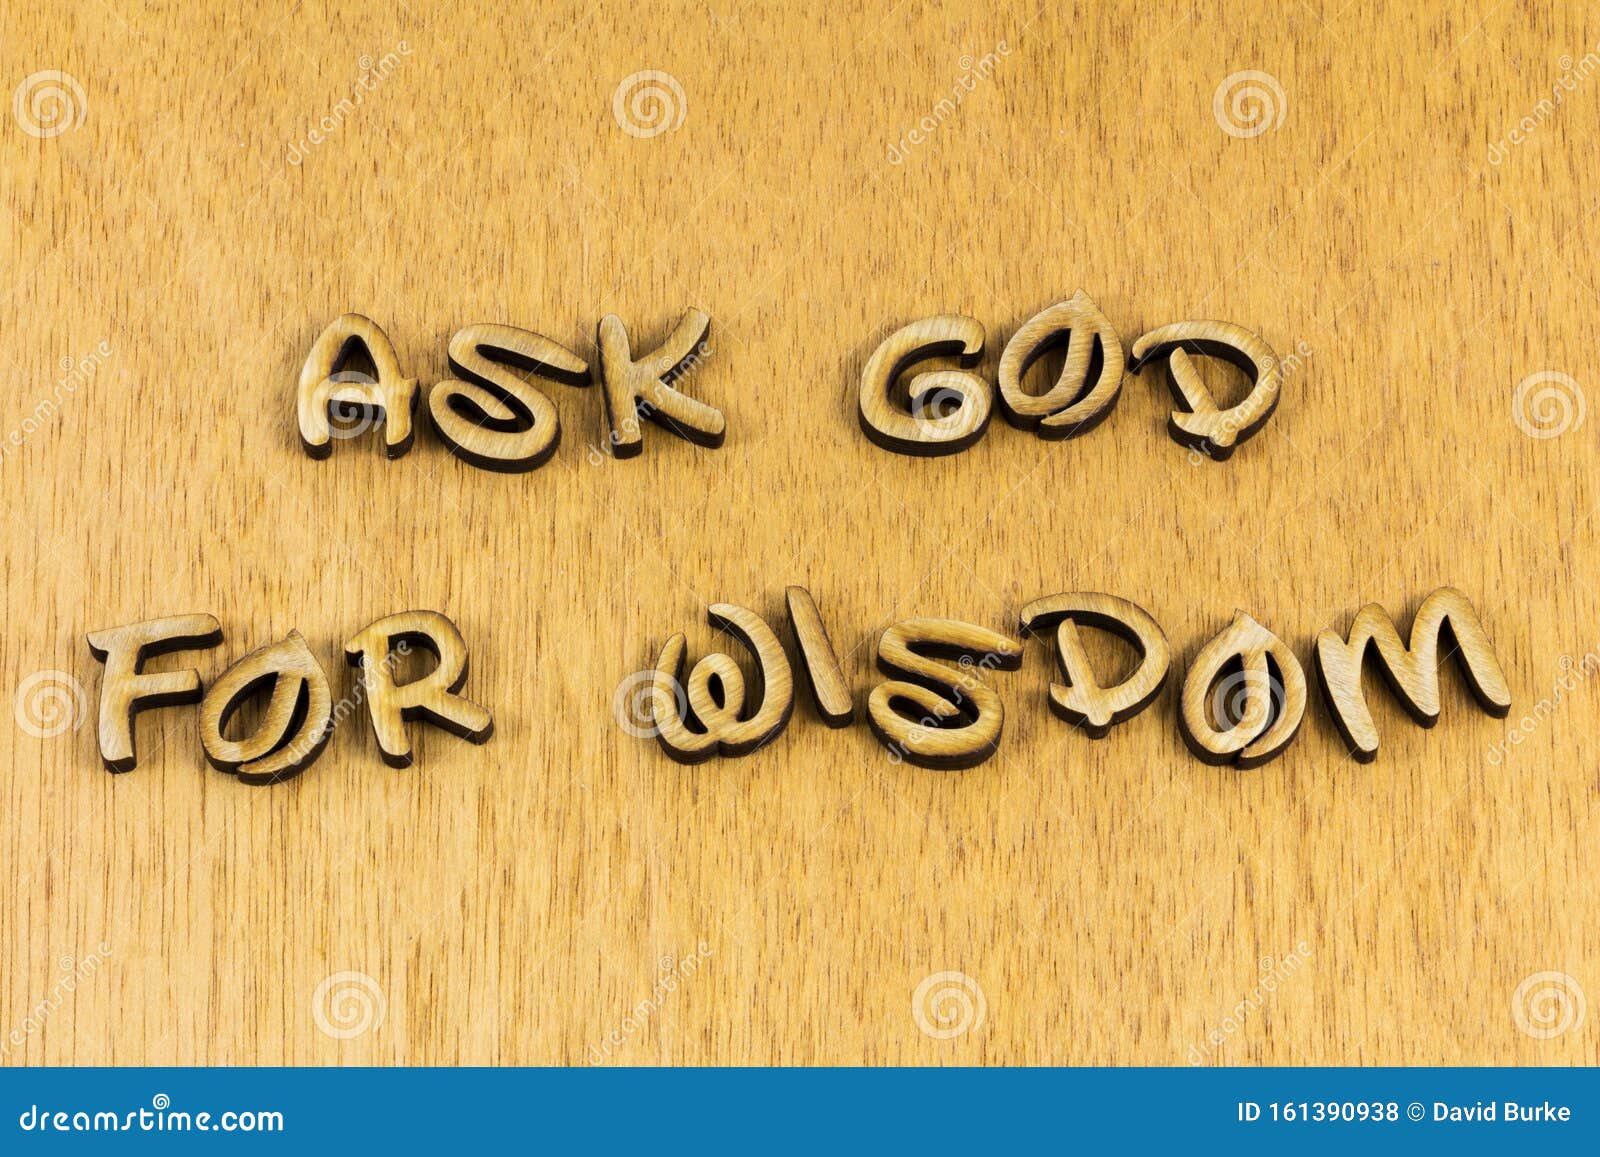 ask god wisdom truth guidance love salvation prayer teach teaching